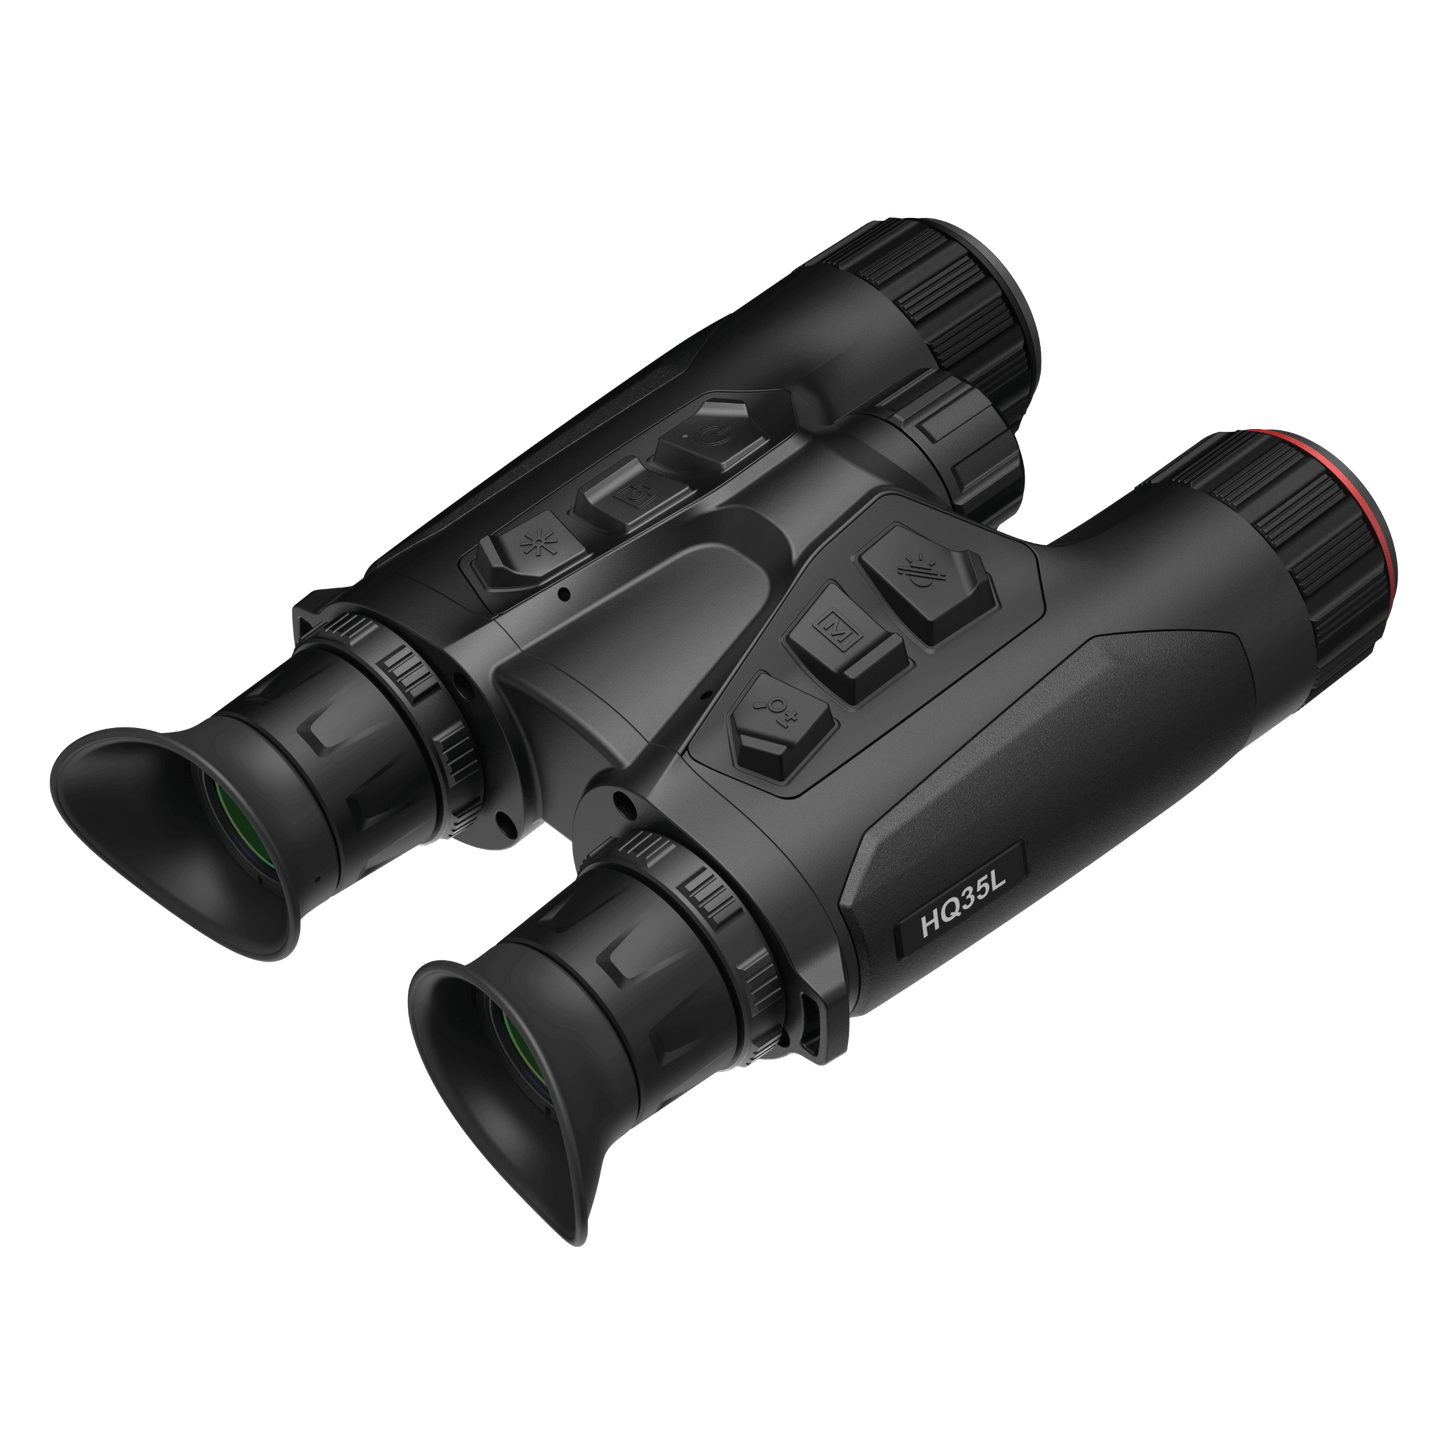 HikMicro Habrok HQ35L Multi-Function Night Vision Thermal Binoculars - Rear Right View